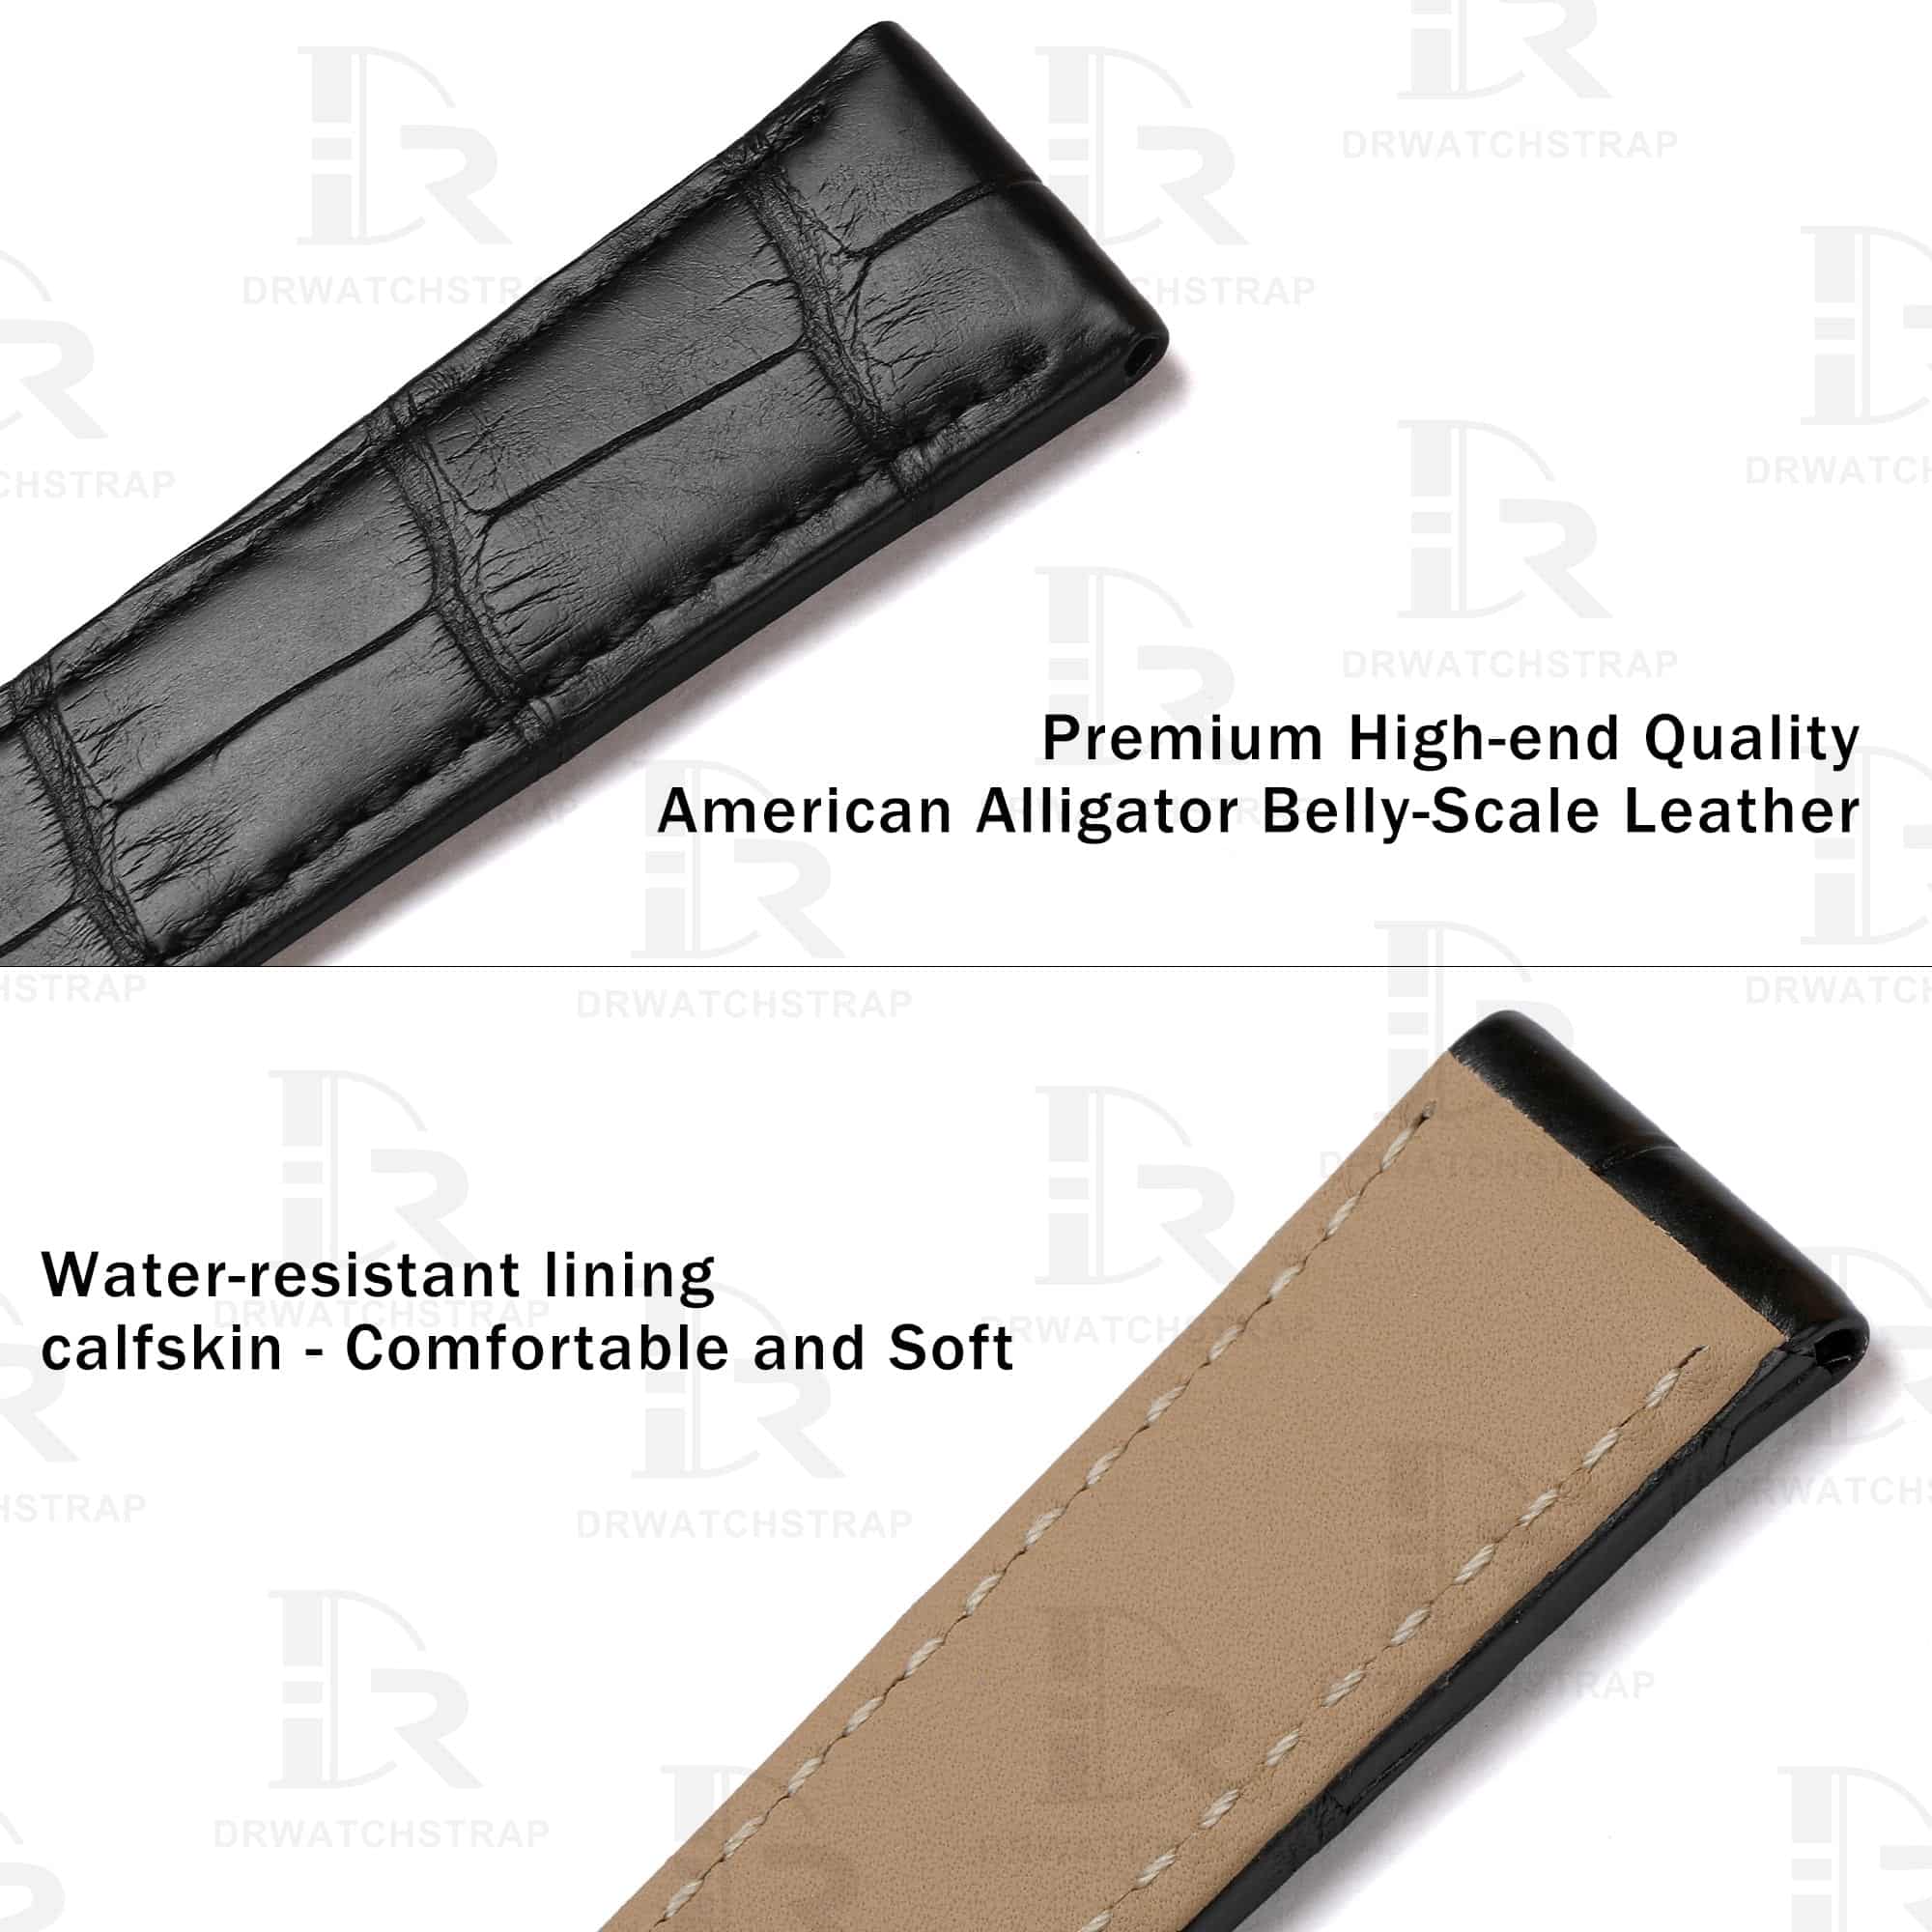 Genuine alligator leather and premium water-resistant calfskin